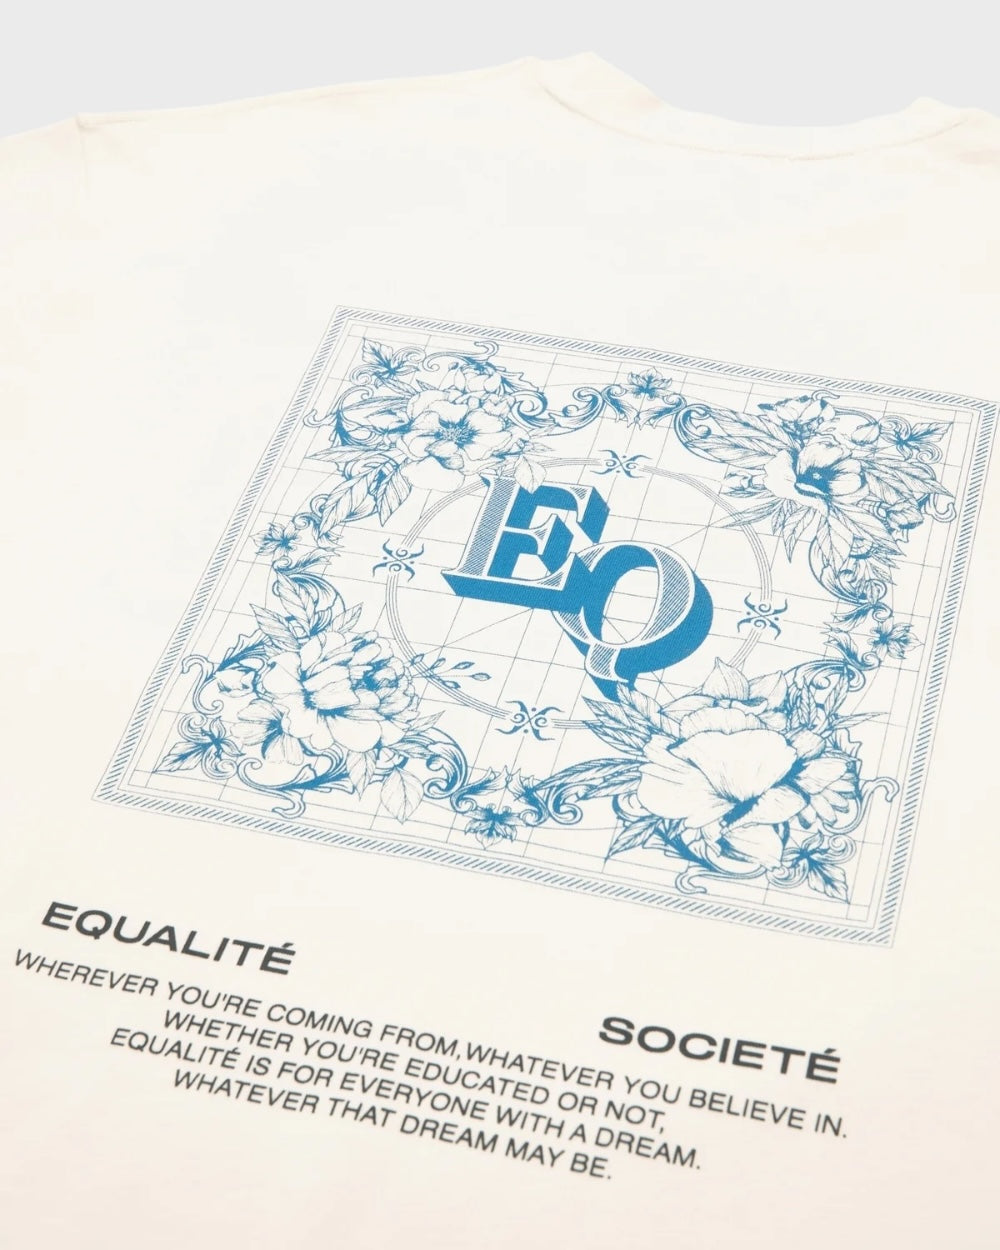 Equalite | Tile Oversized T-shirt Off-white Unisex